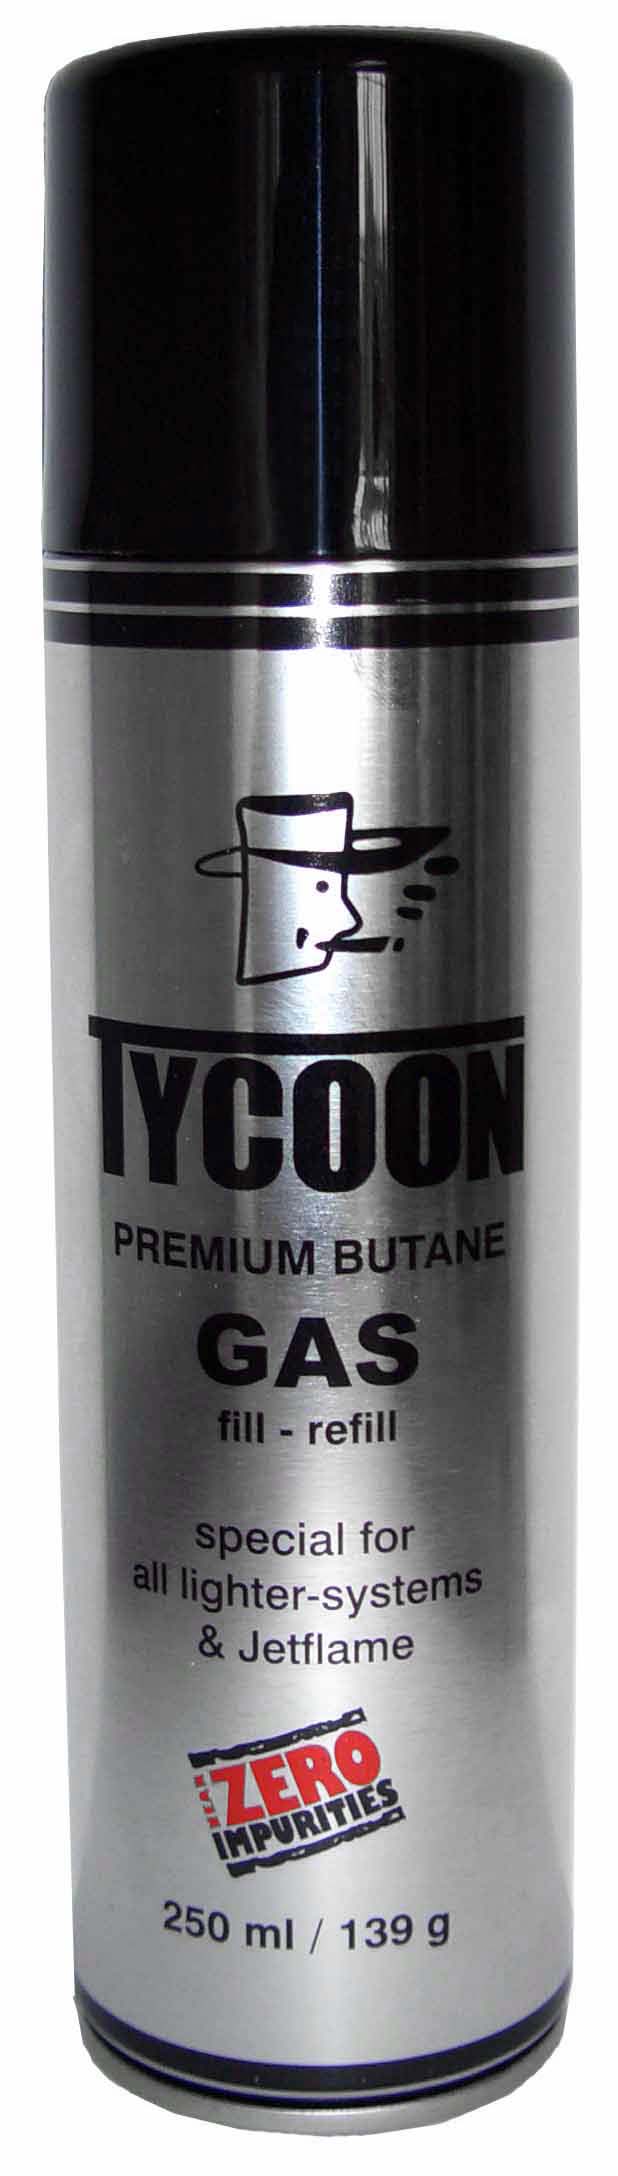 RELAGS Tycoon Premiumgas für Feuerzeuge - Feuerzeuggas